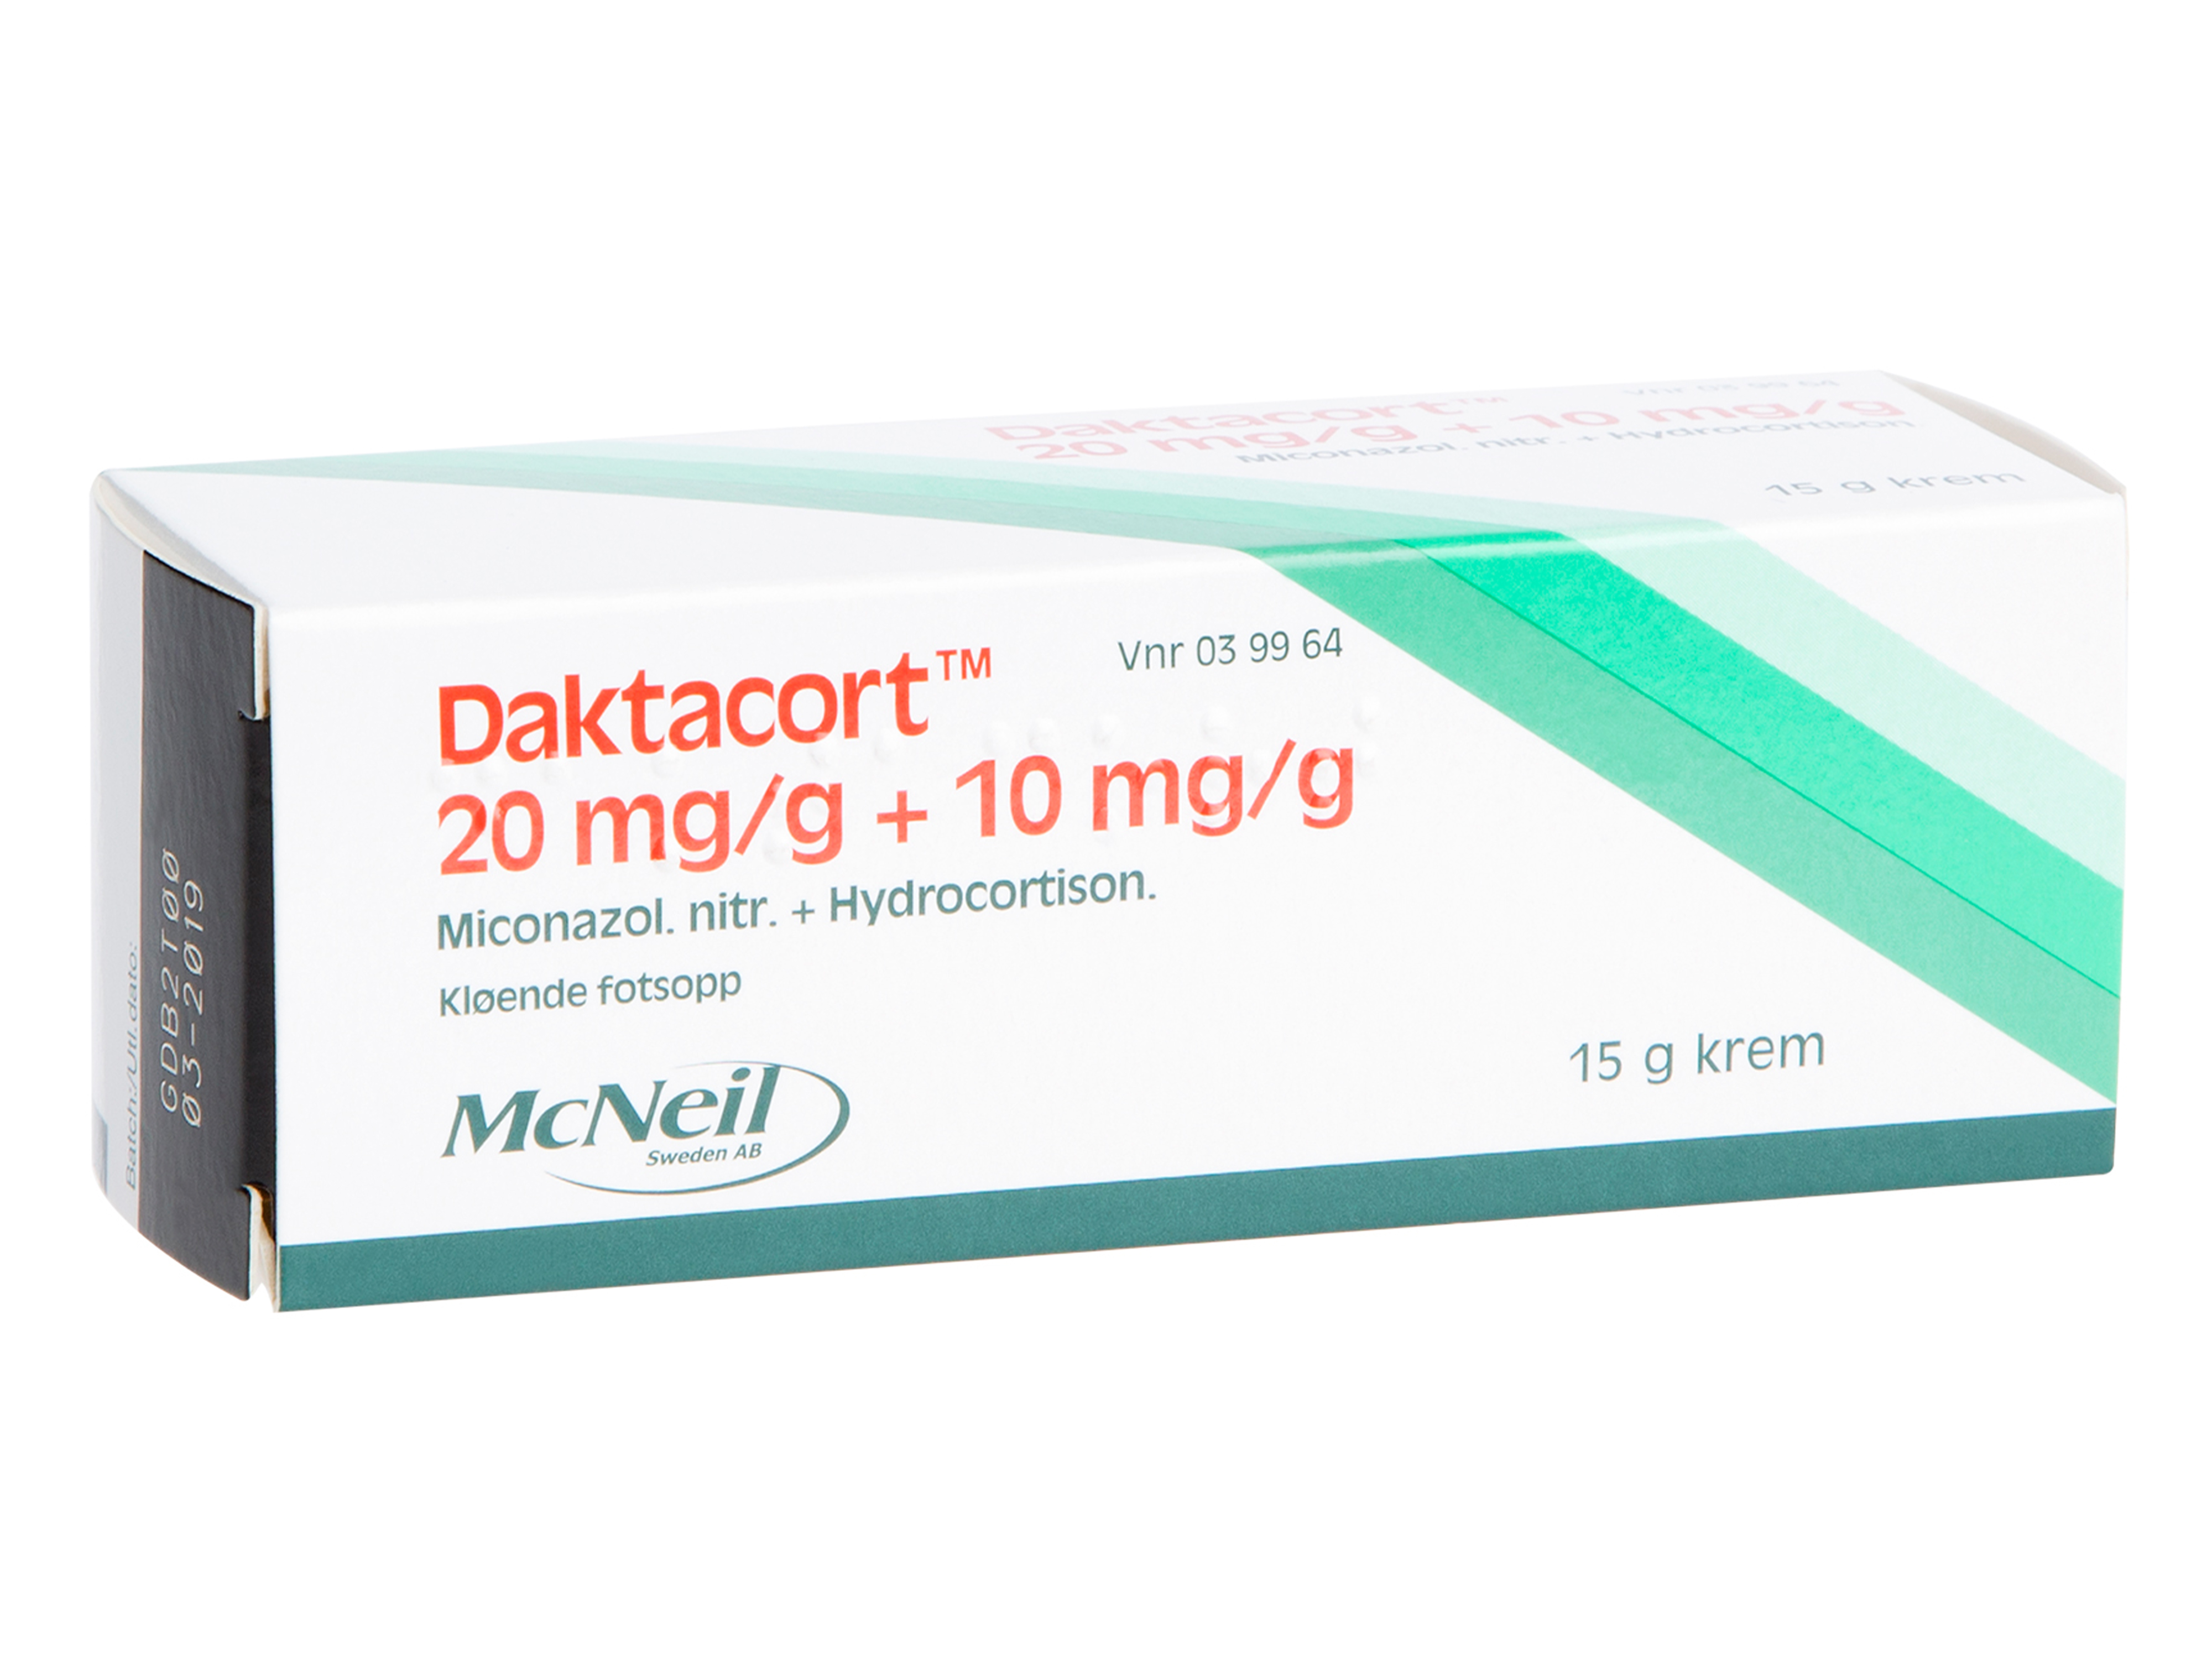 Daktacort Dactacort krem 20+10 mg/g, 15 gram